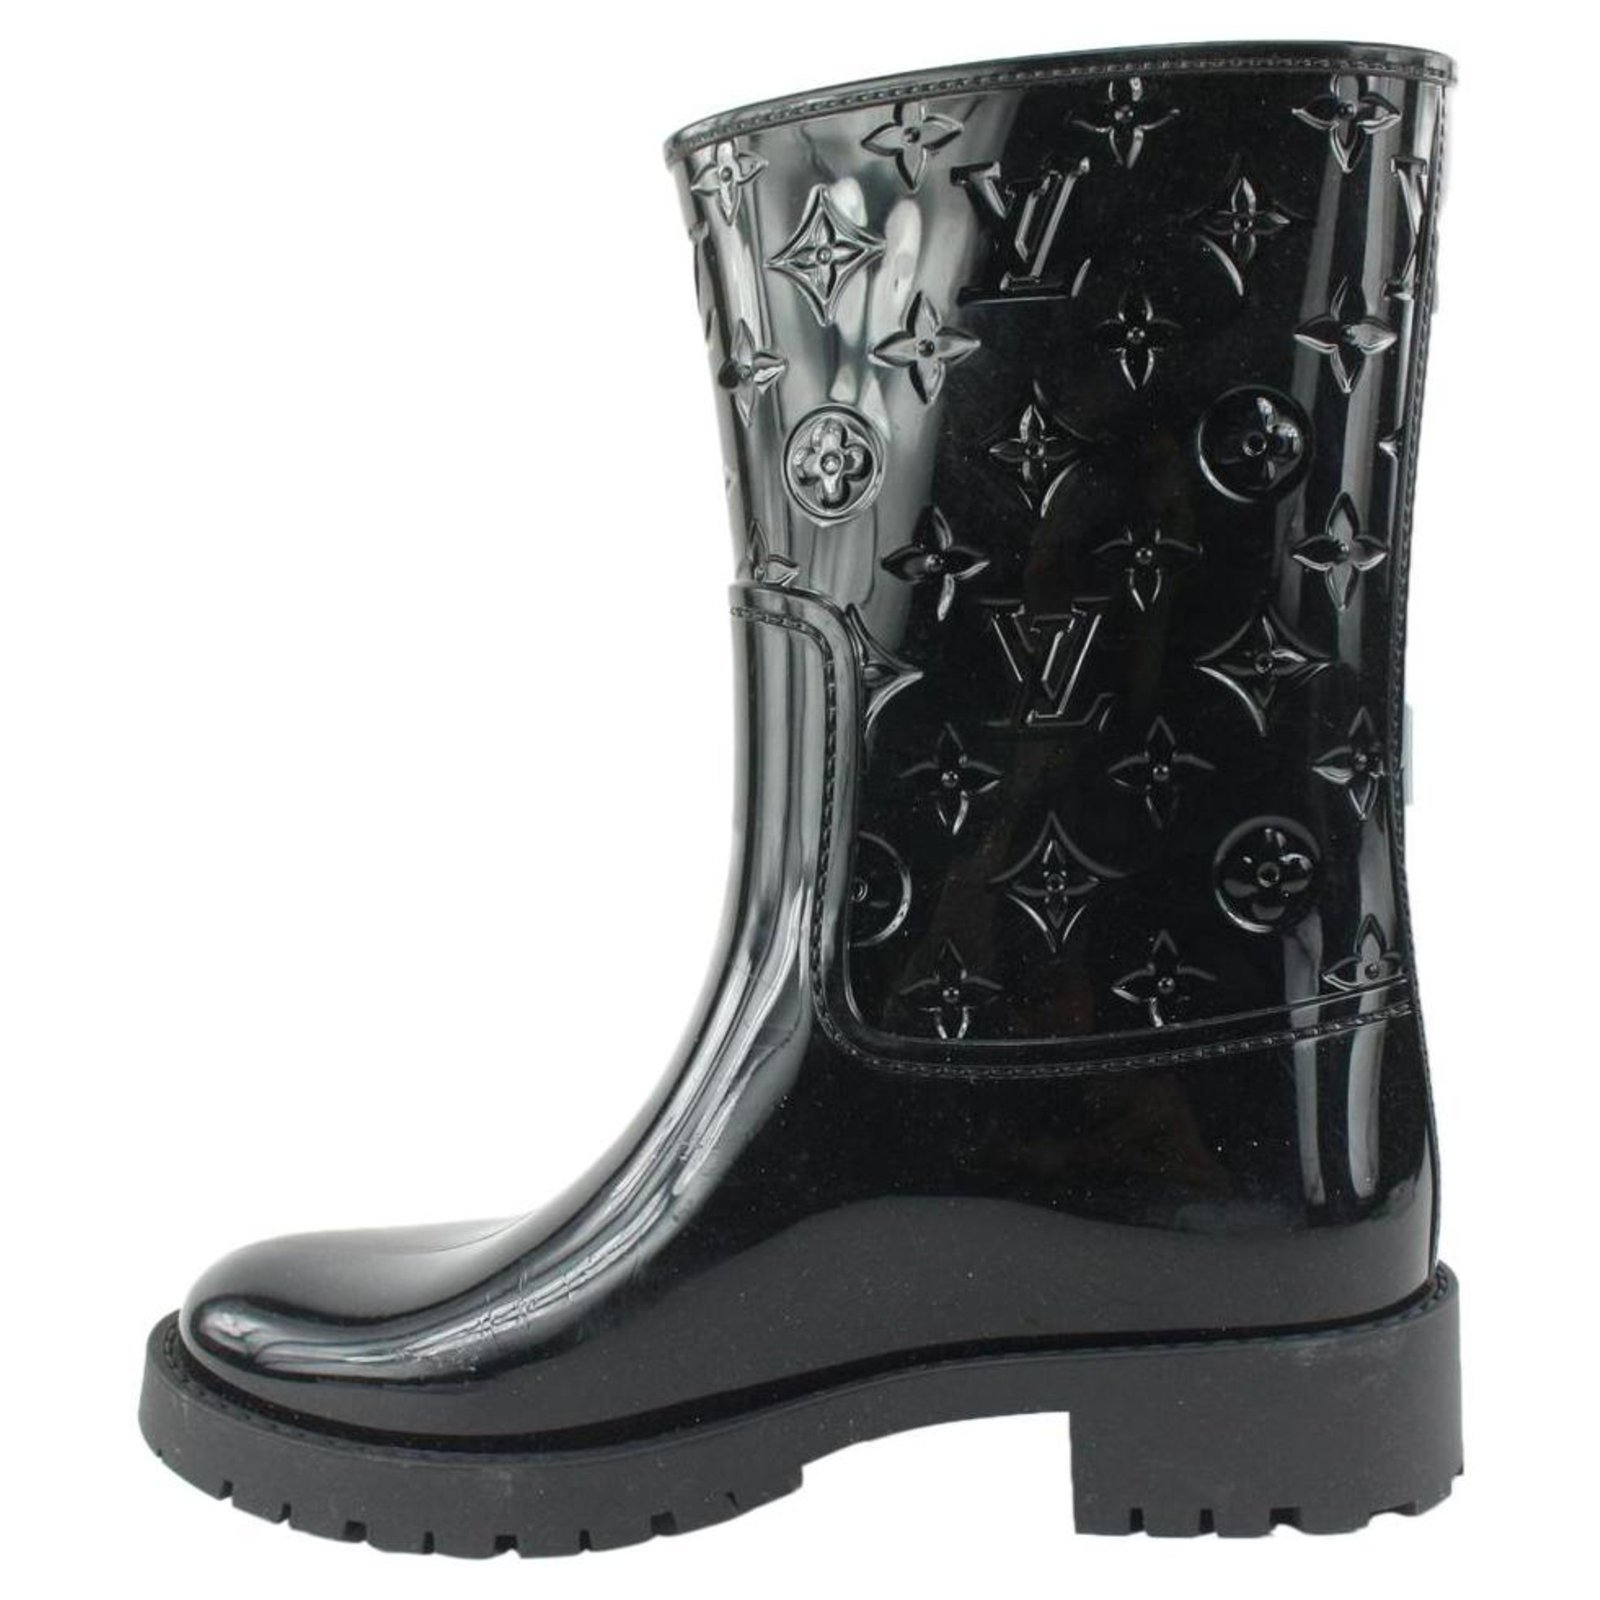 Louis Vuitton Rain Boots for Sale in Troy MI  OfferUp